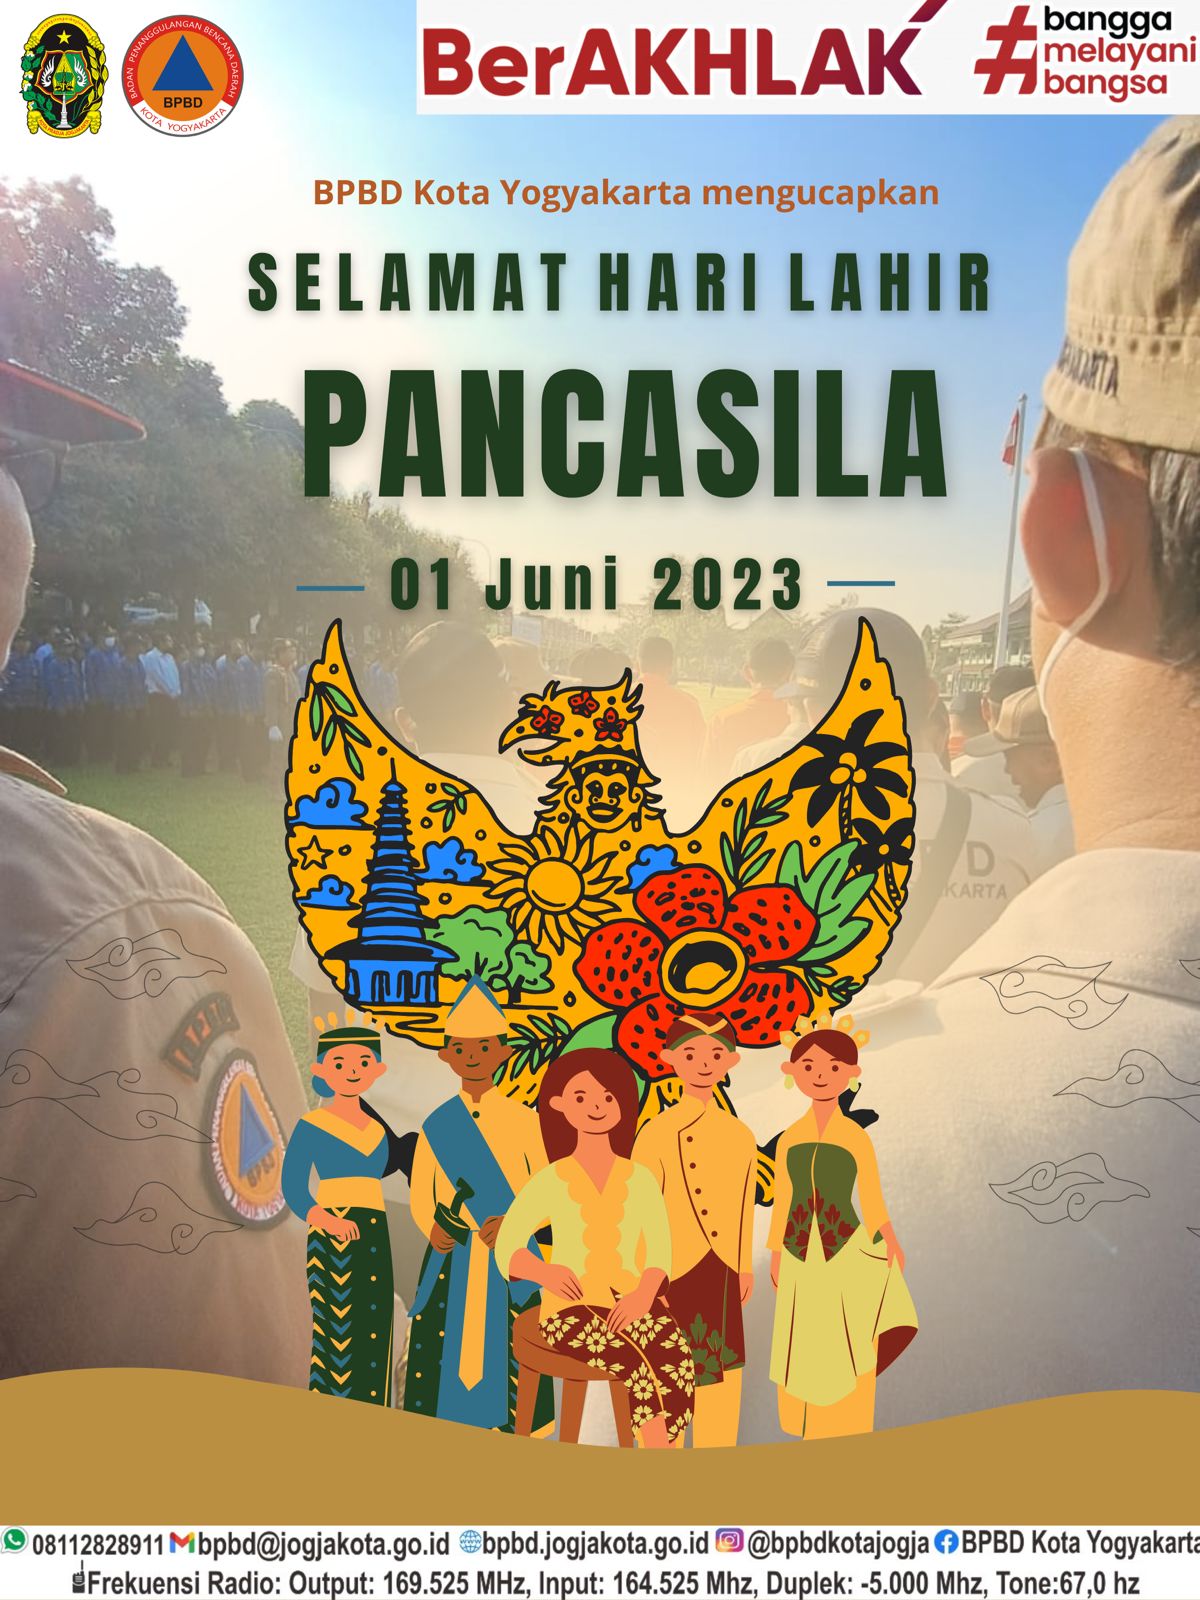 SELAMAT HARI LAHIR PANCASILA 01 JUNI 2023